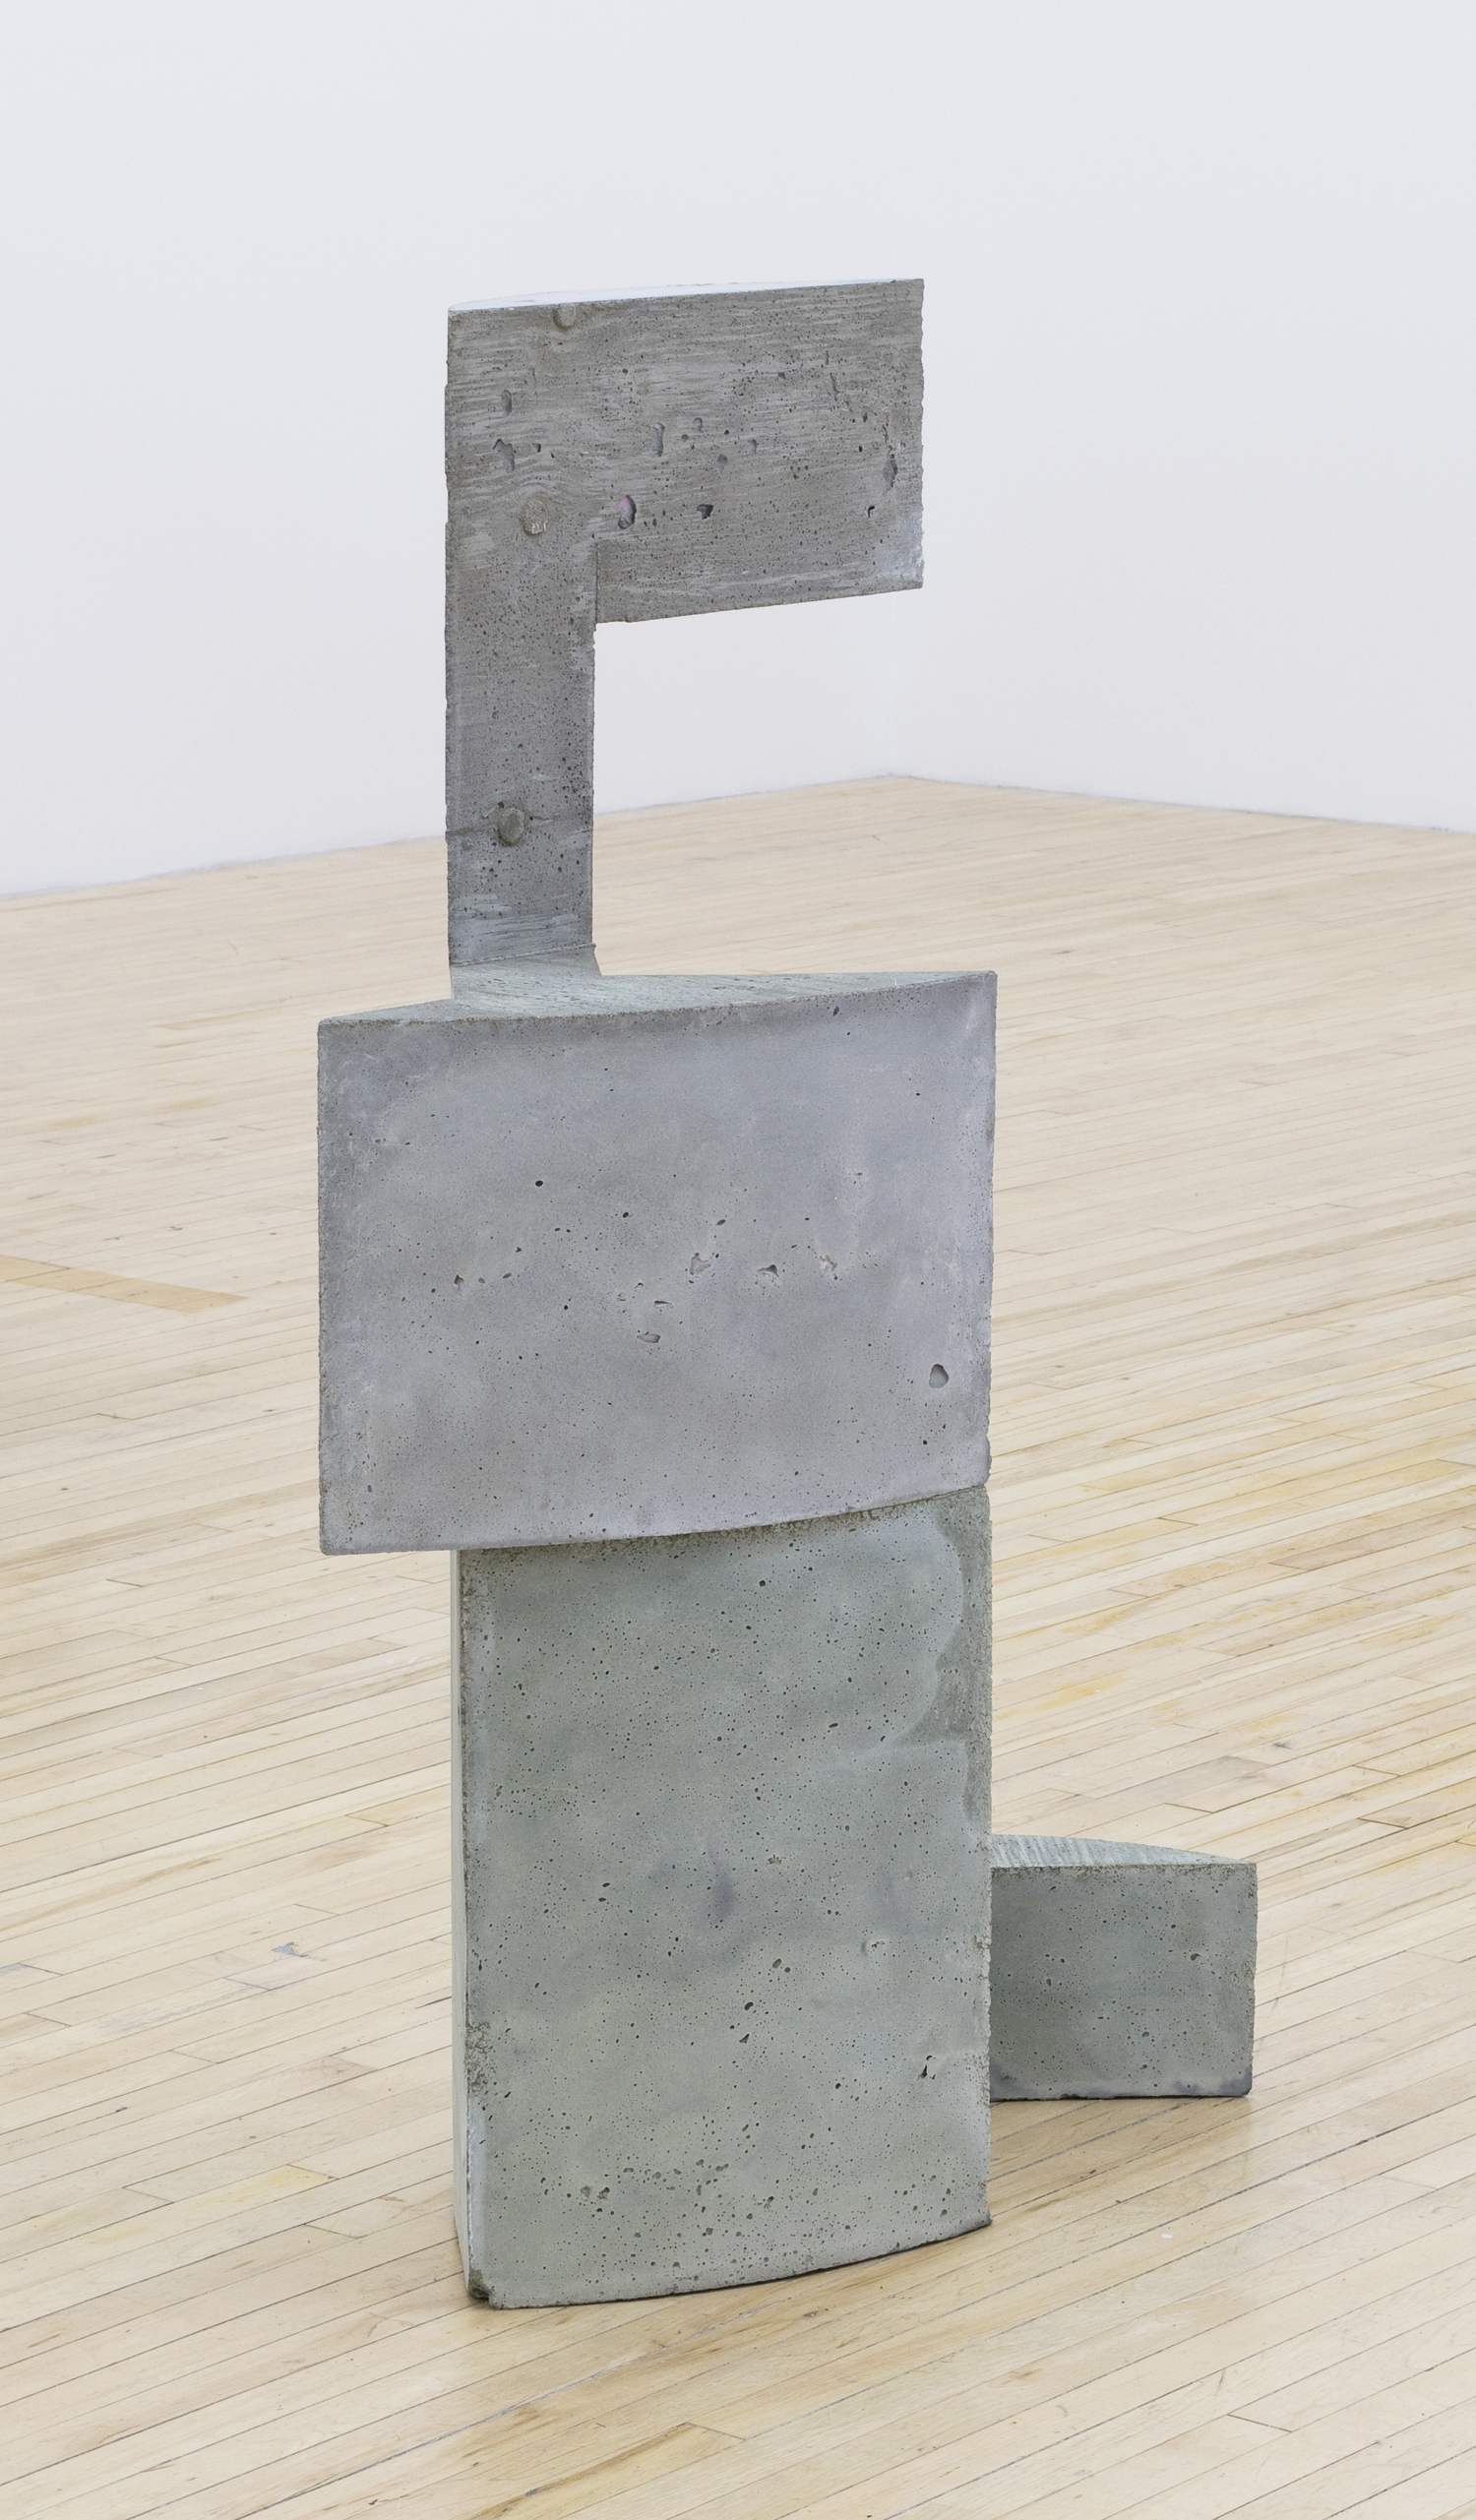   Yna , 2016, concrete and foam, 45 x 28 x 12 in 